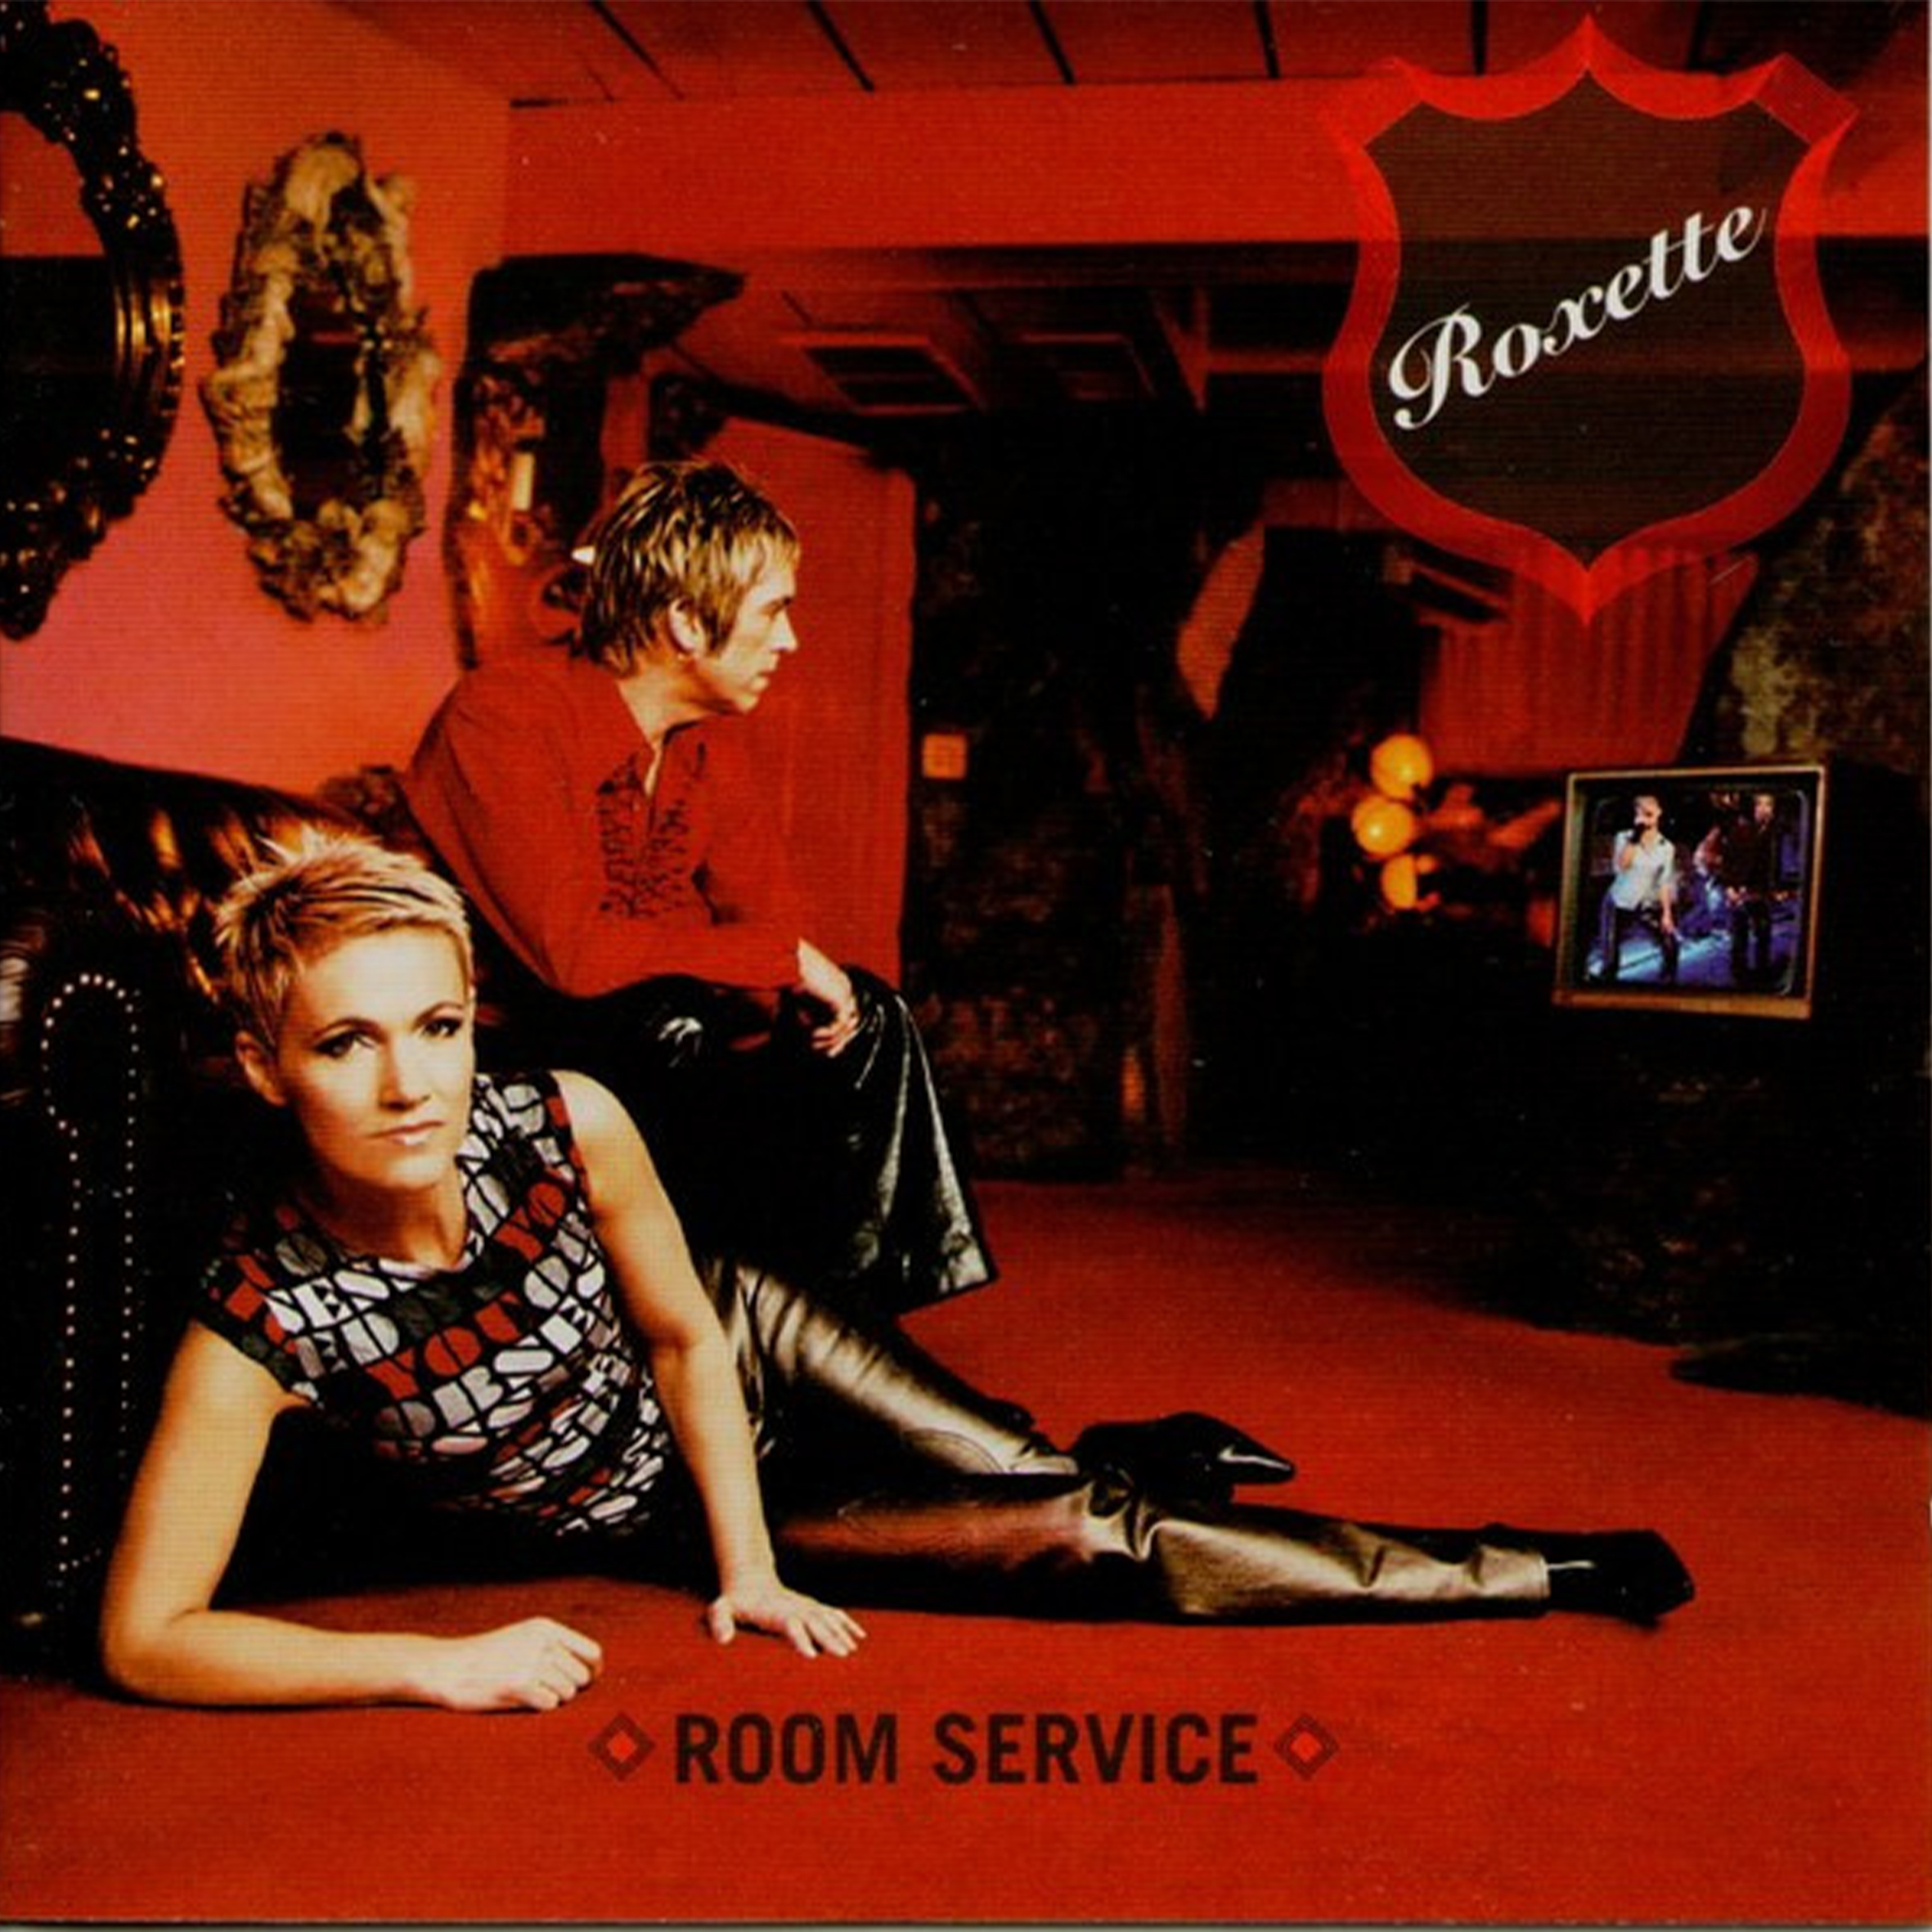 CD - Roxette - Room Service